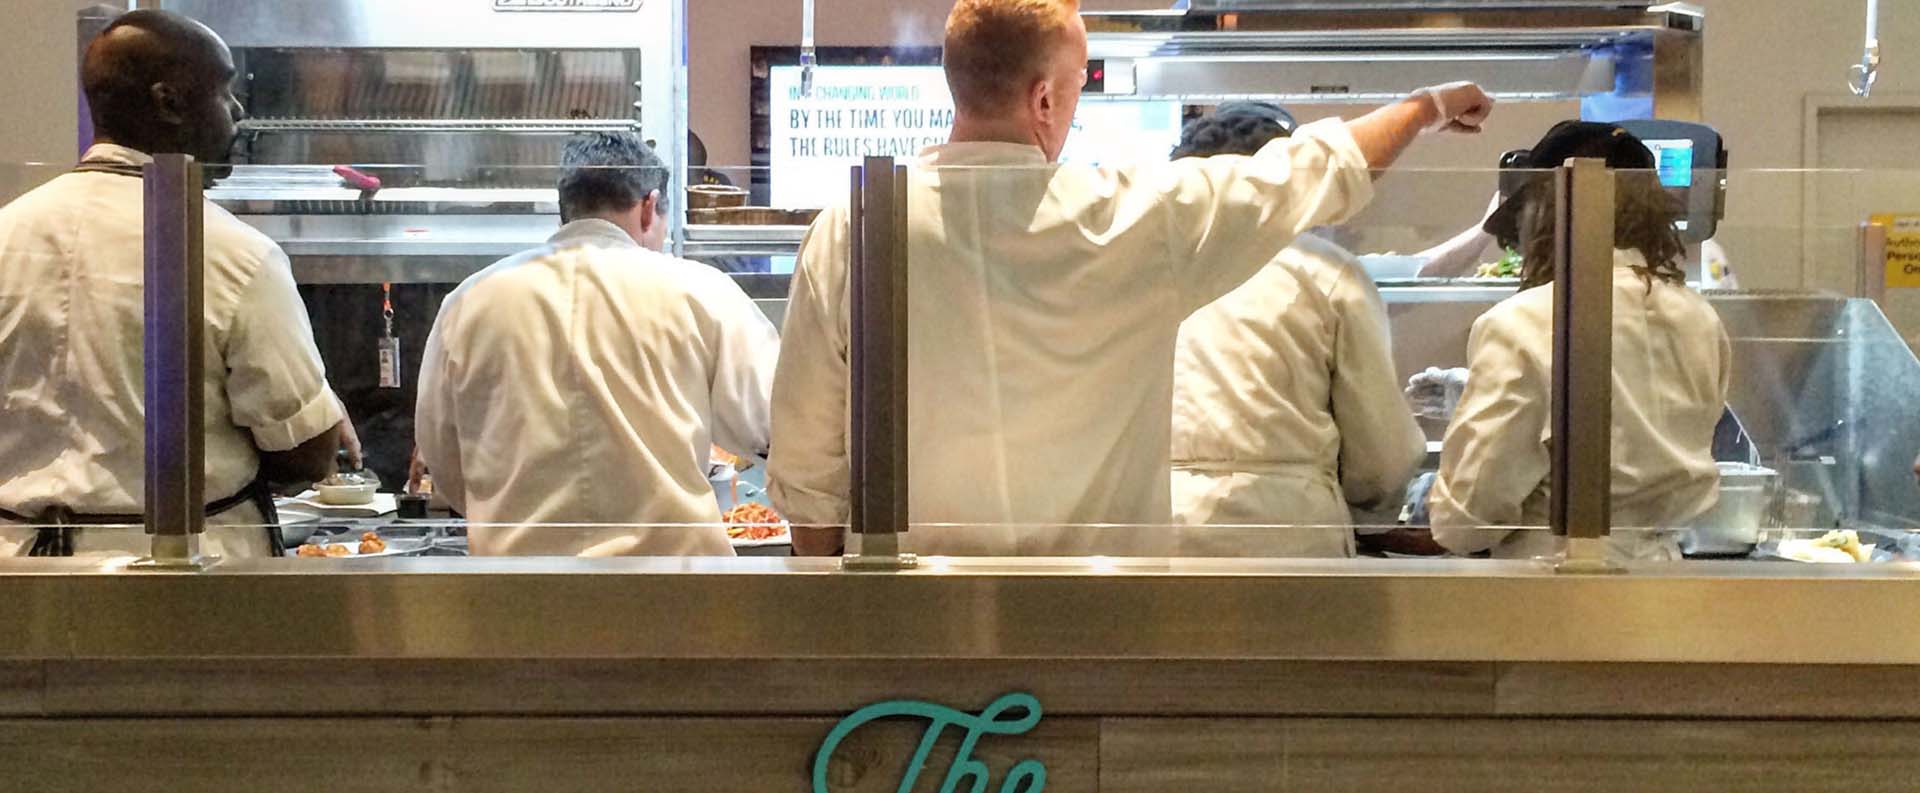 Staff at an OTG airport restaurant work the food prep line